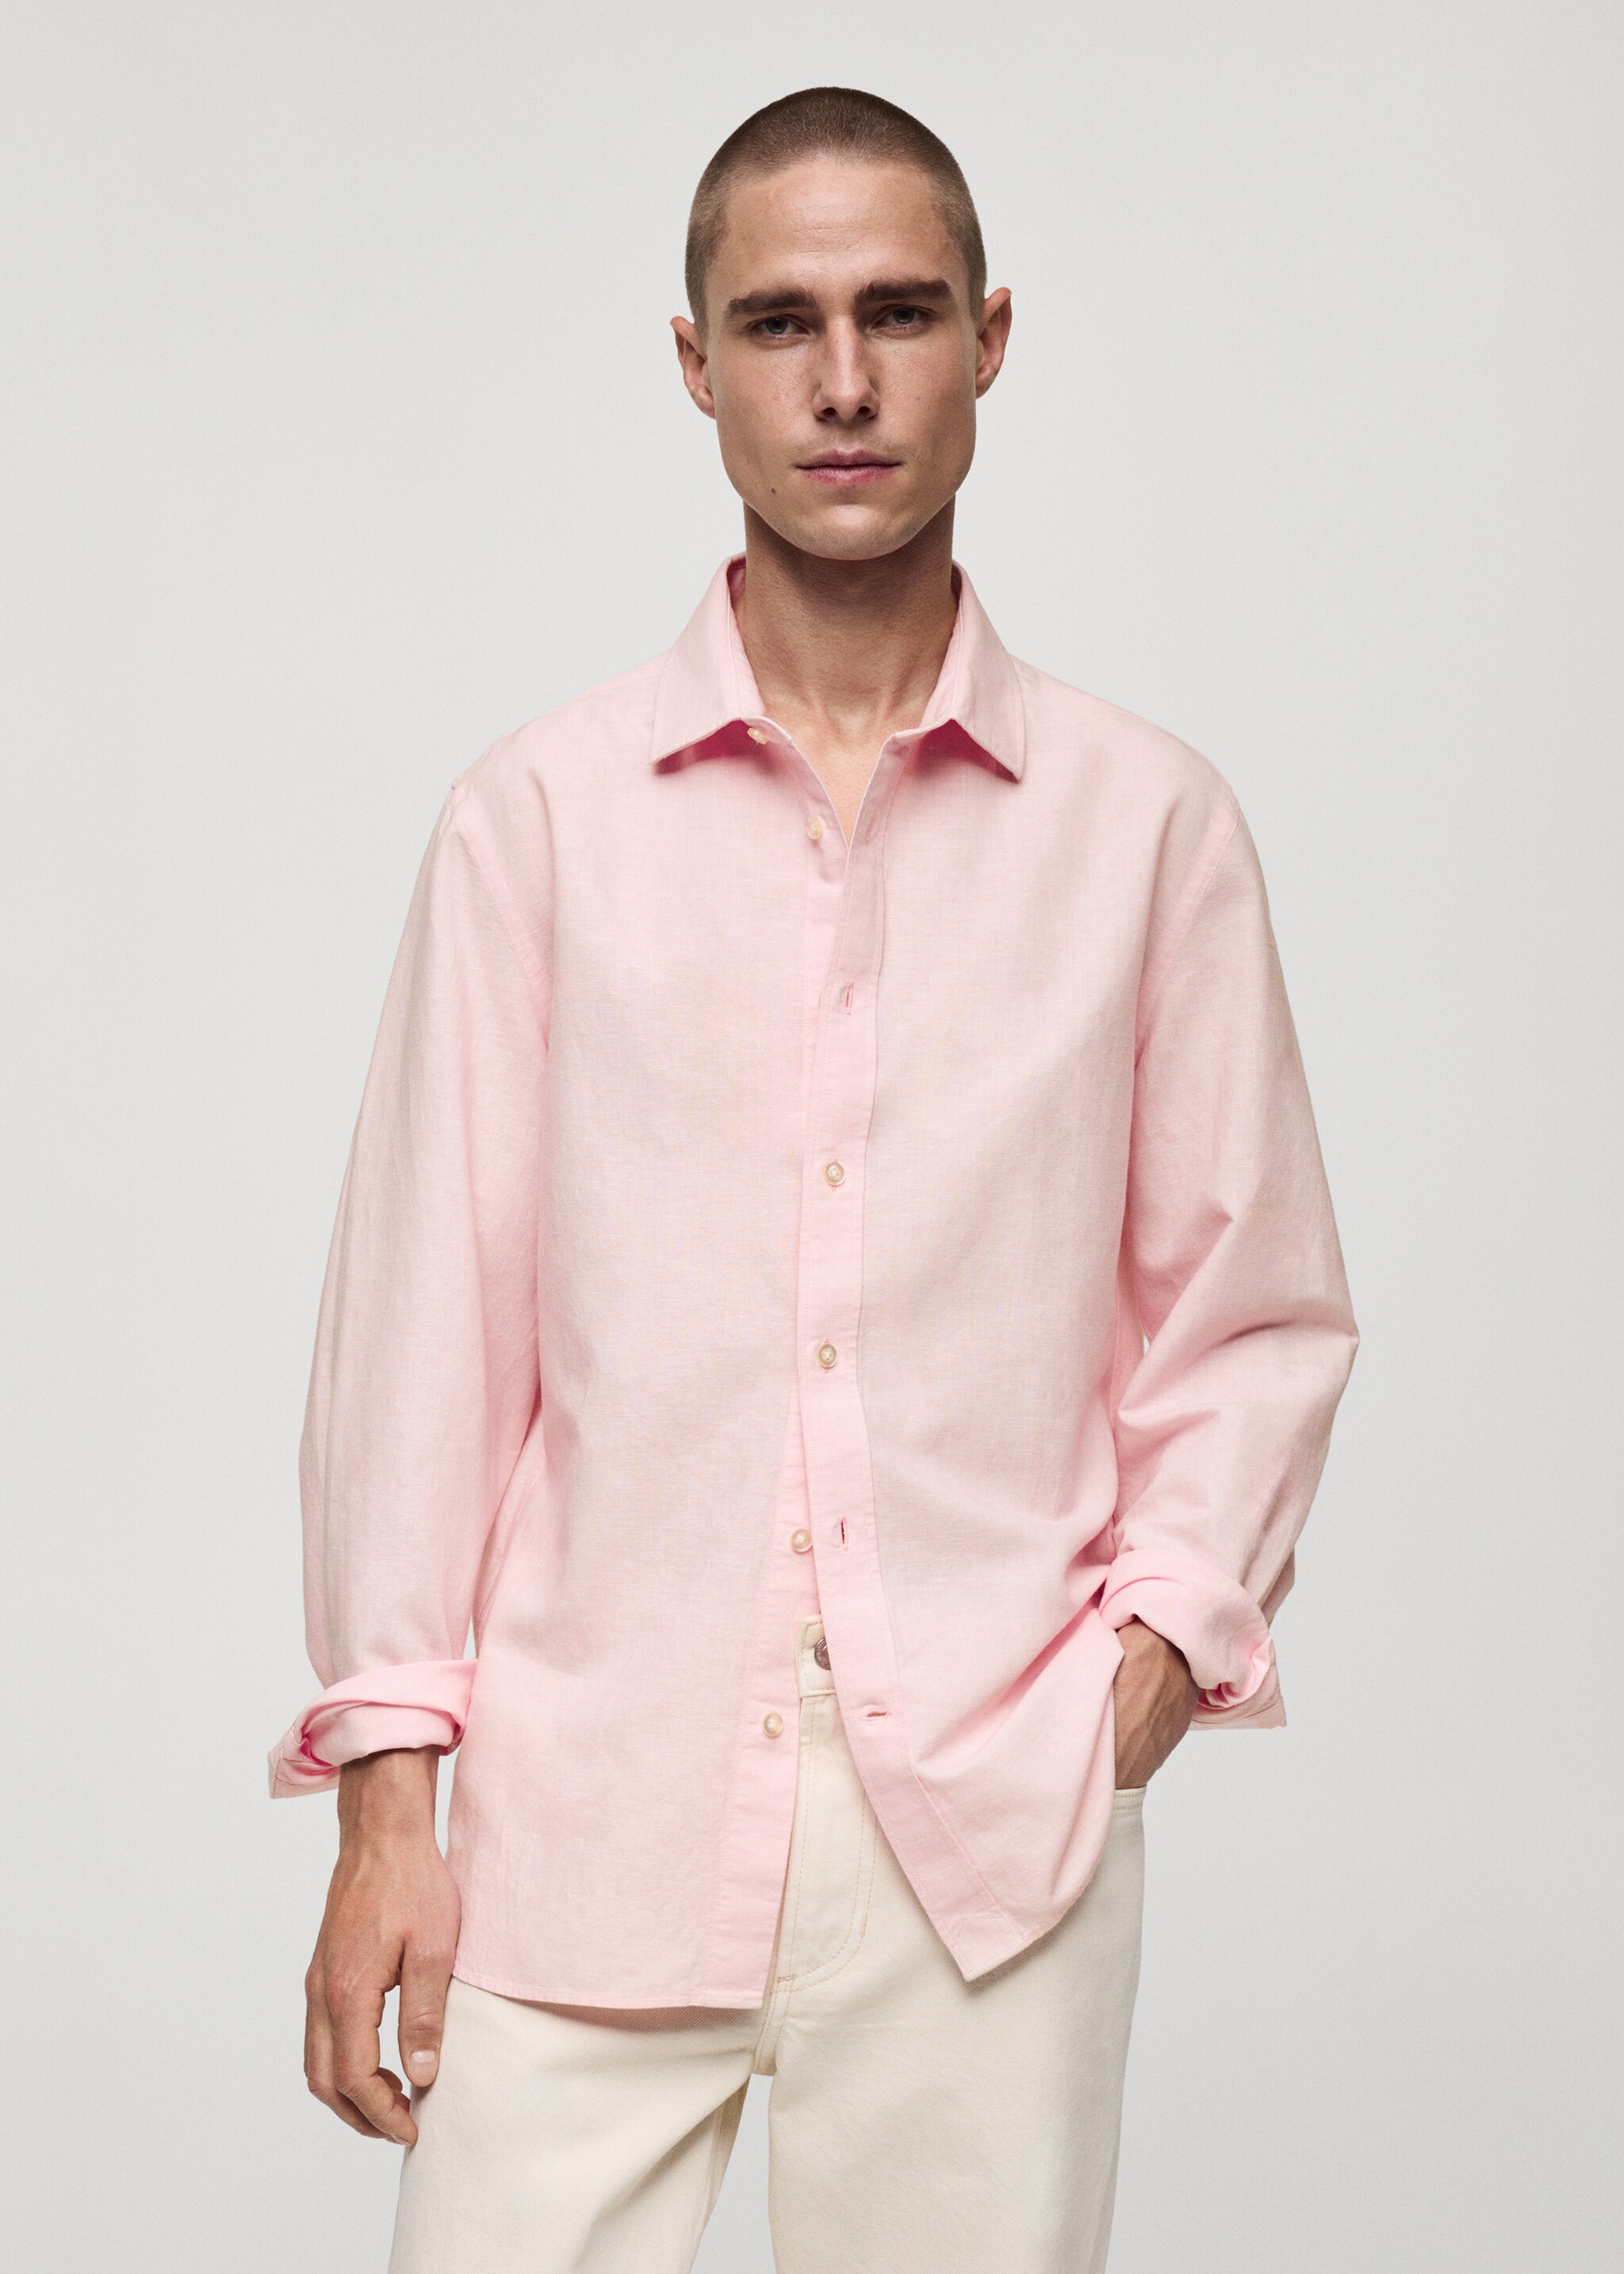 Classic fit linen blend shirt - Plano médio